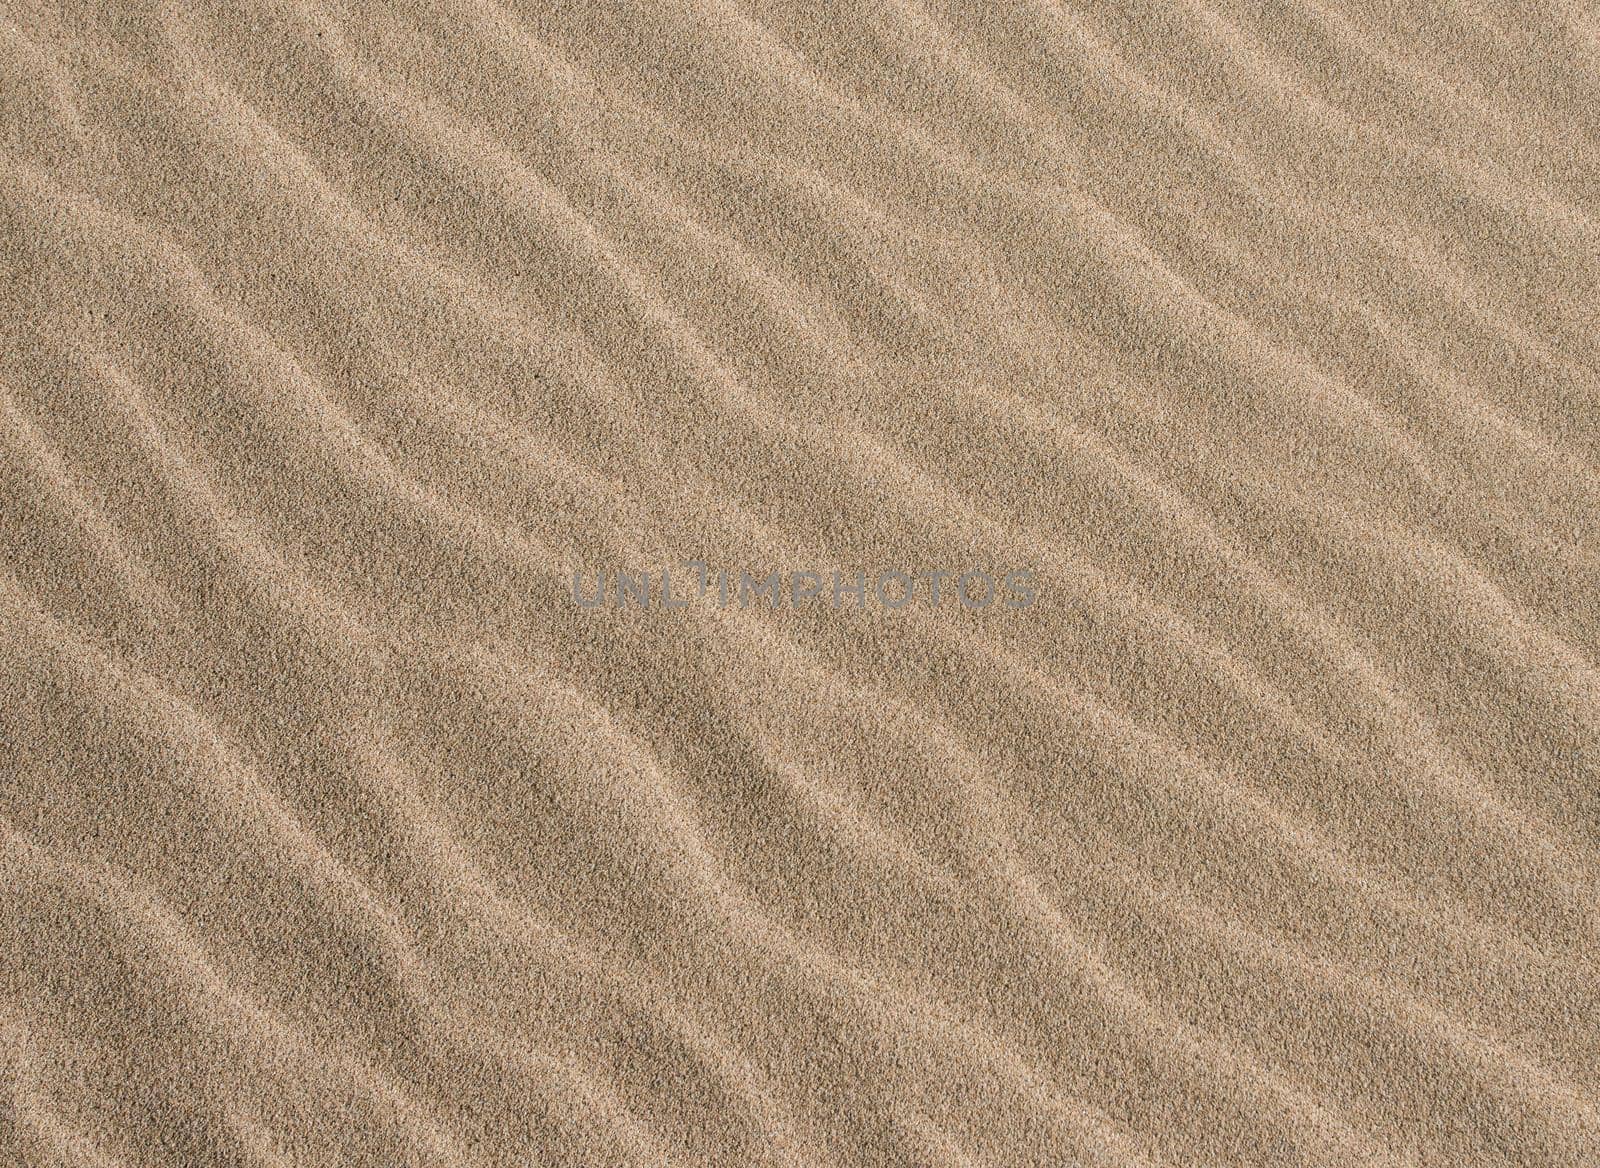 Simple sandy ripples by lisaldw